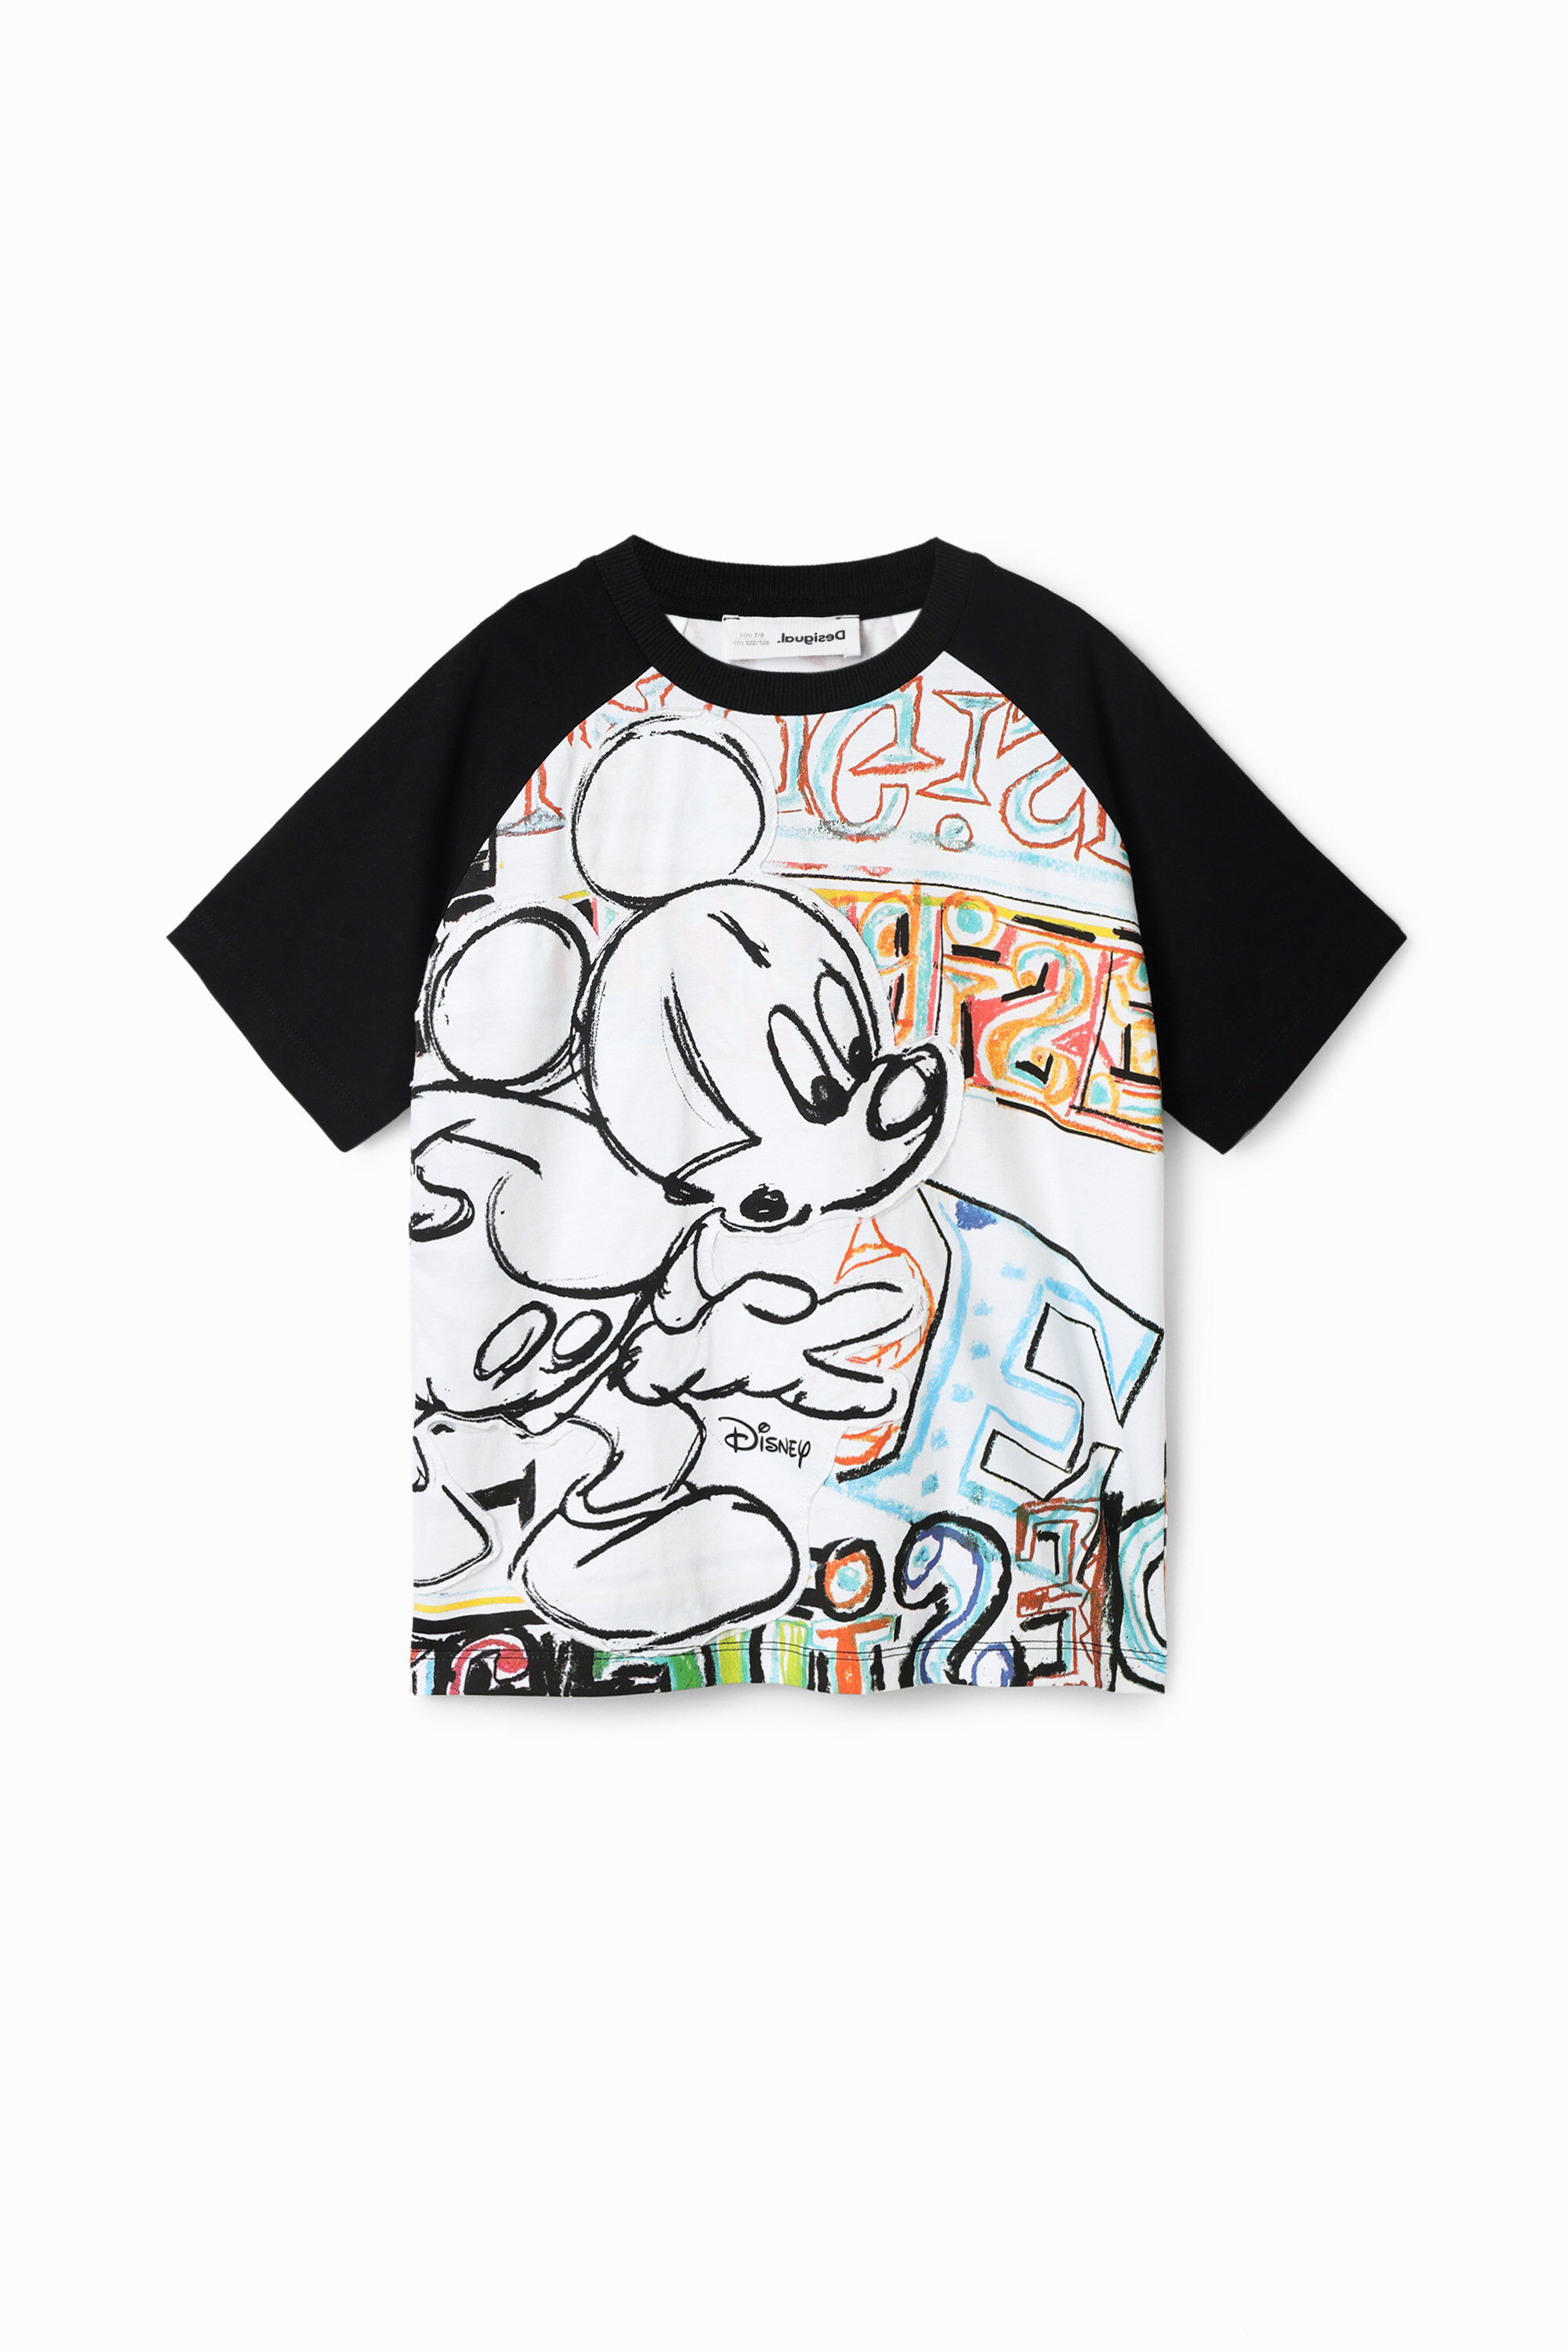 Disney’s Mickey Mouse illustration T-shirt - WHITE - 7/8